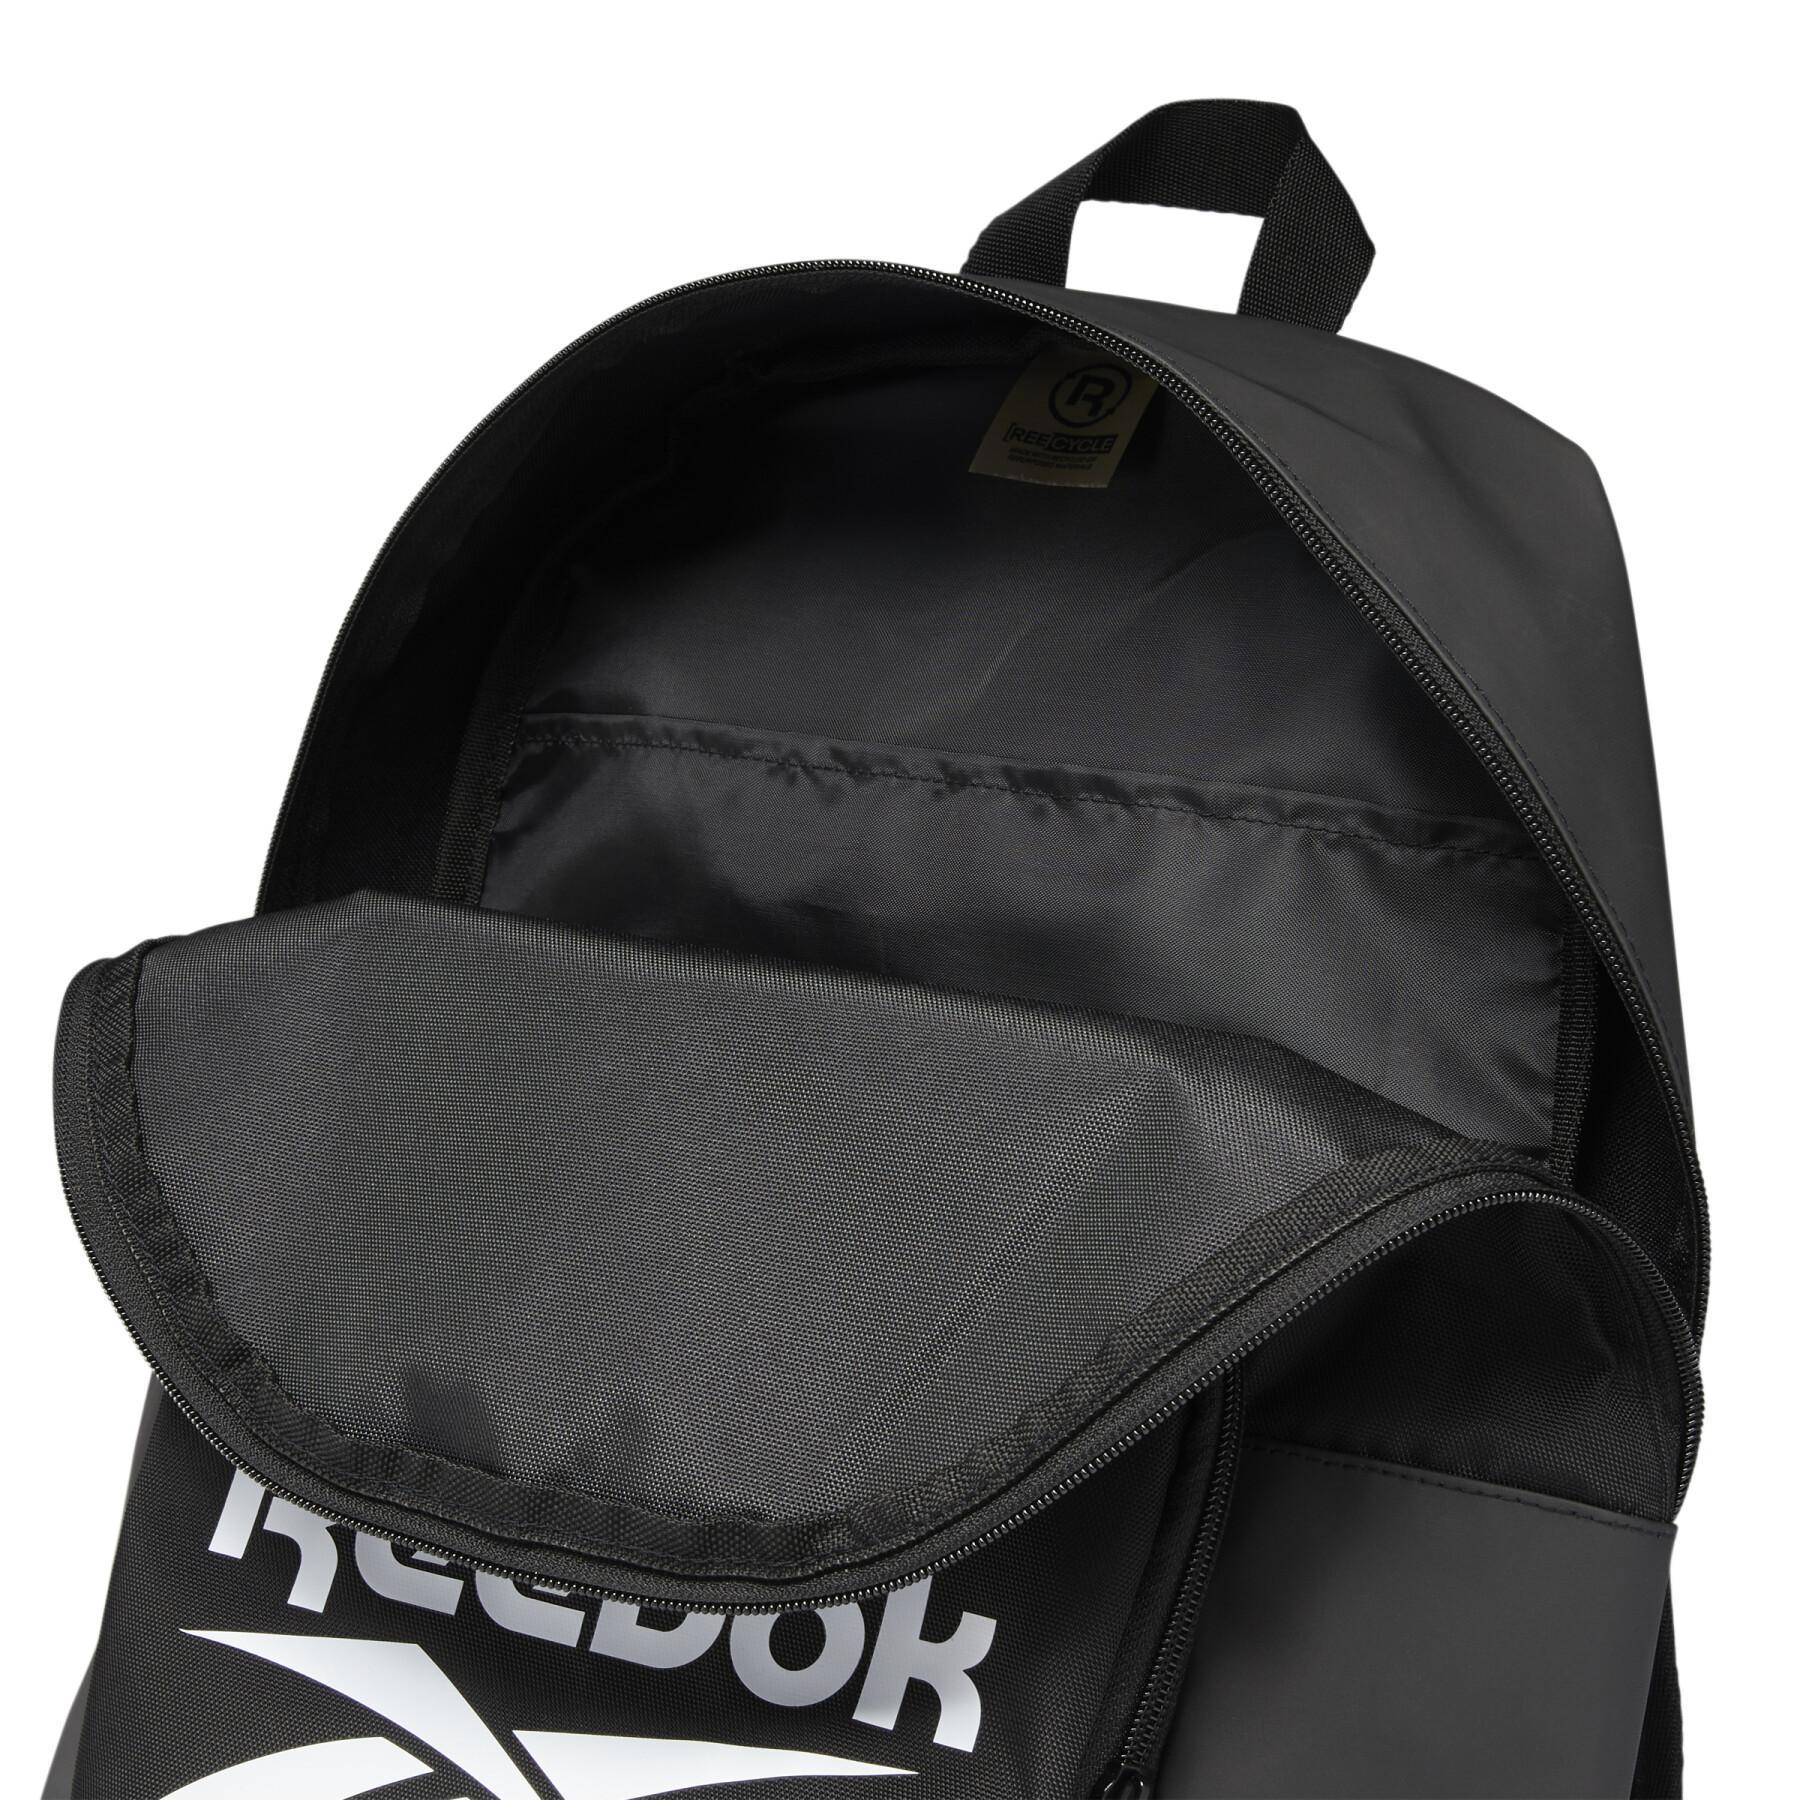 Backpack Reebok Classics s Foundation